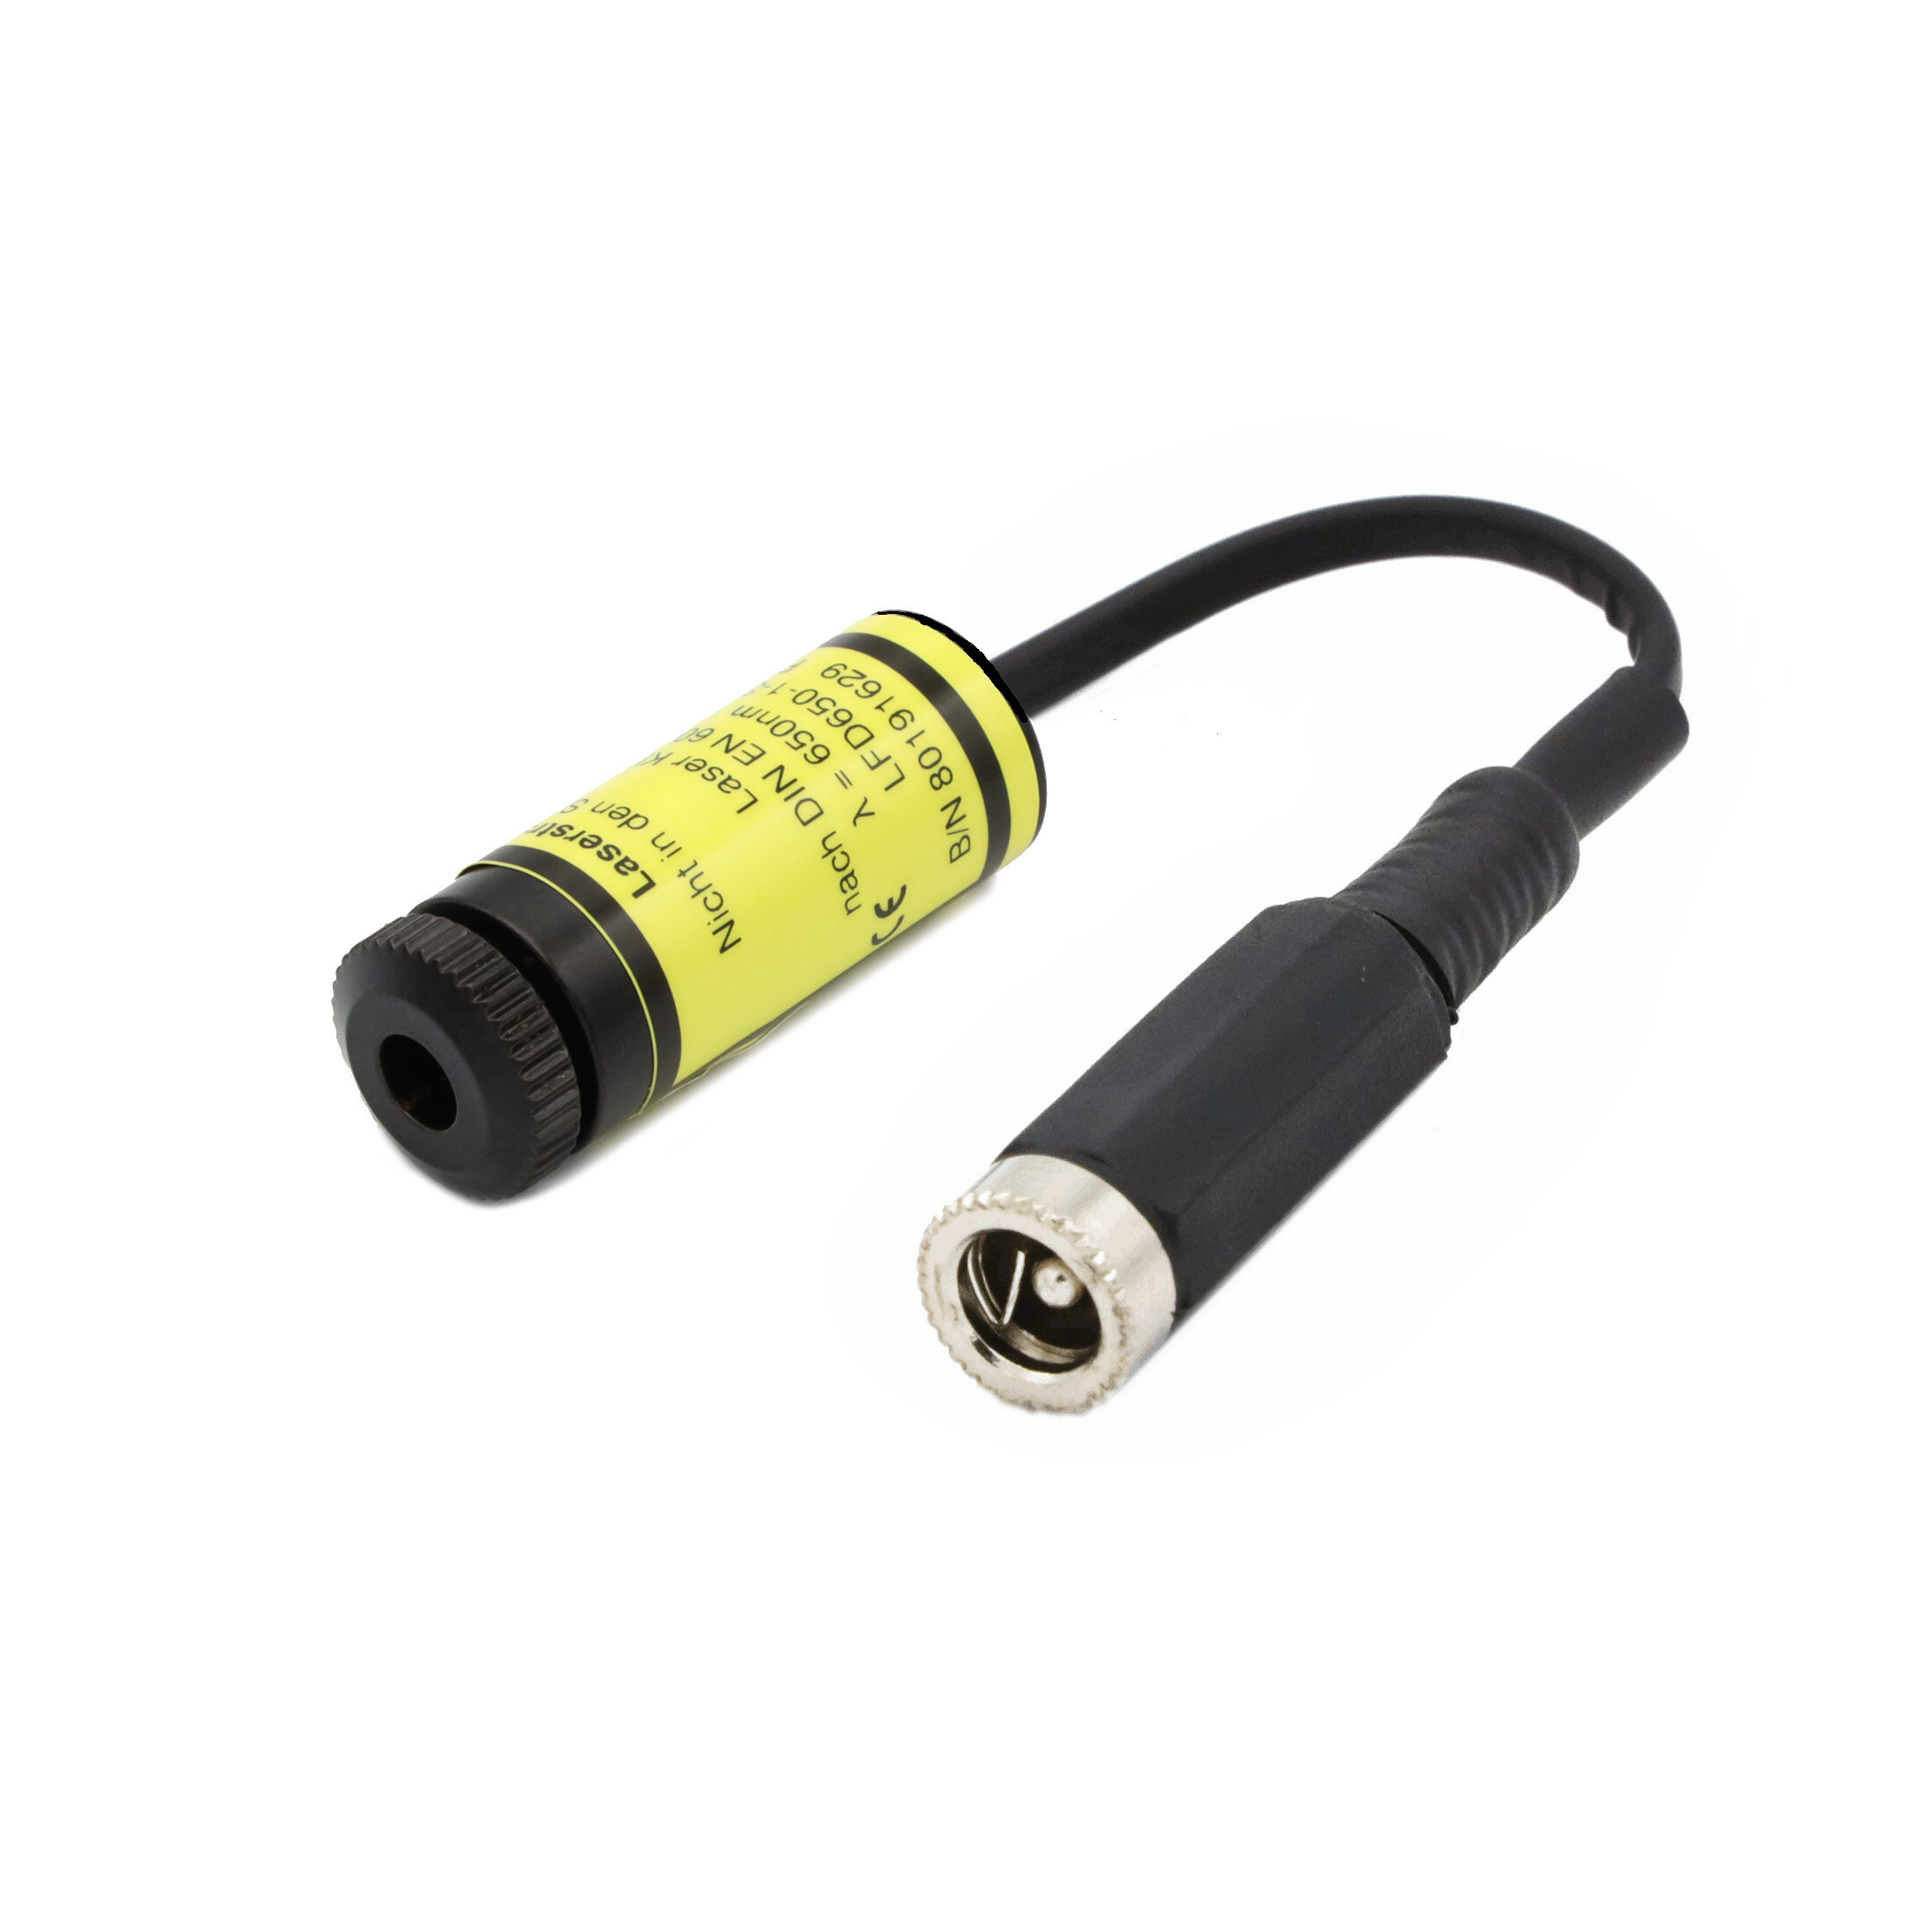 Dot laser, red, 635 nm, 1 mW, 3 V DC, Ø12x30.5 mm, Laser Class 2, Focus adjustable, Cable length 90…